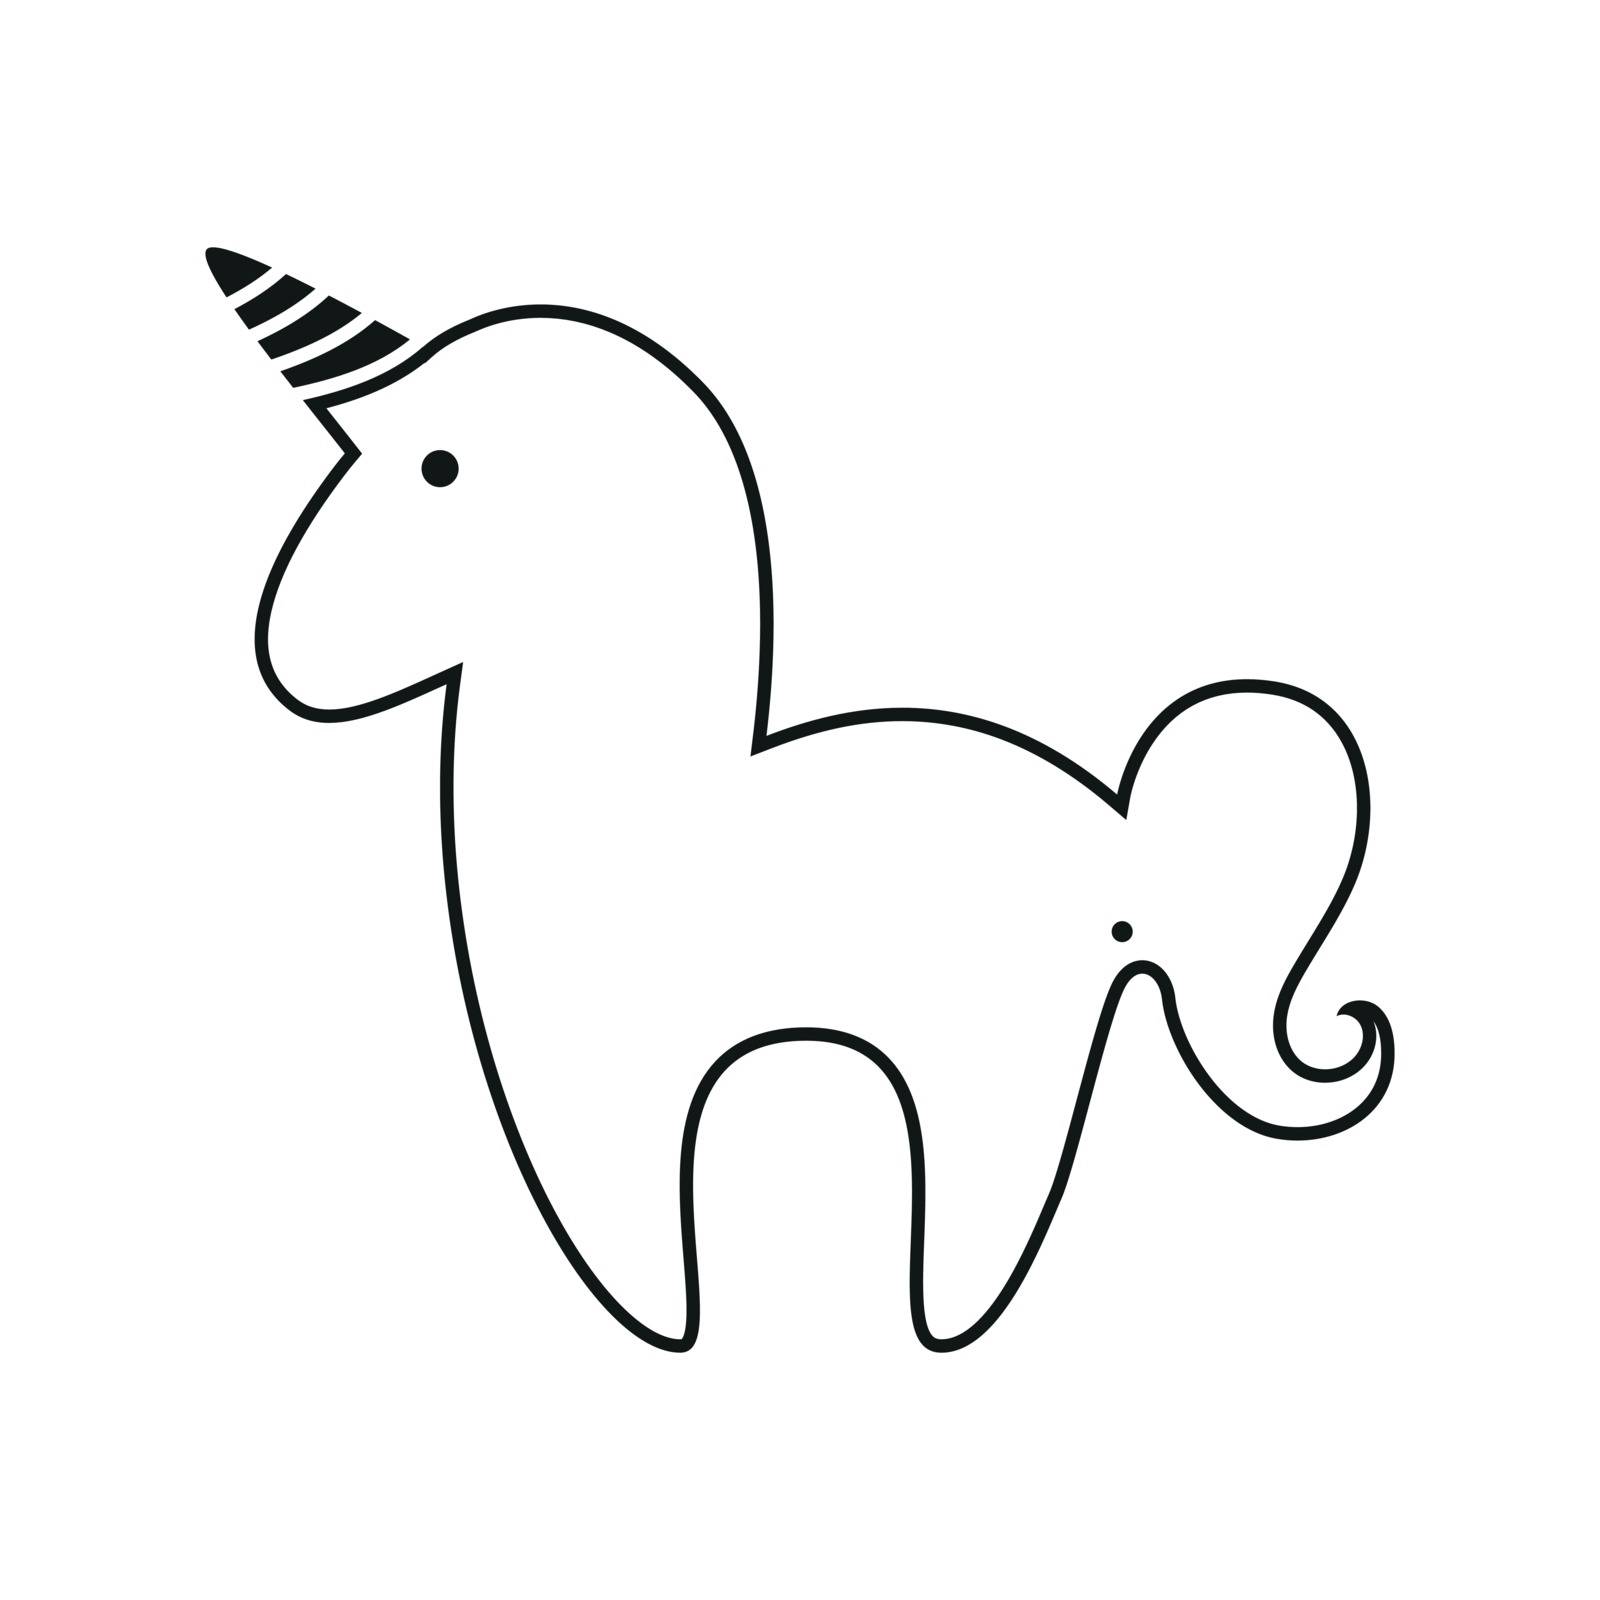 unicorn_illustration_template by antoshkaforever